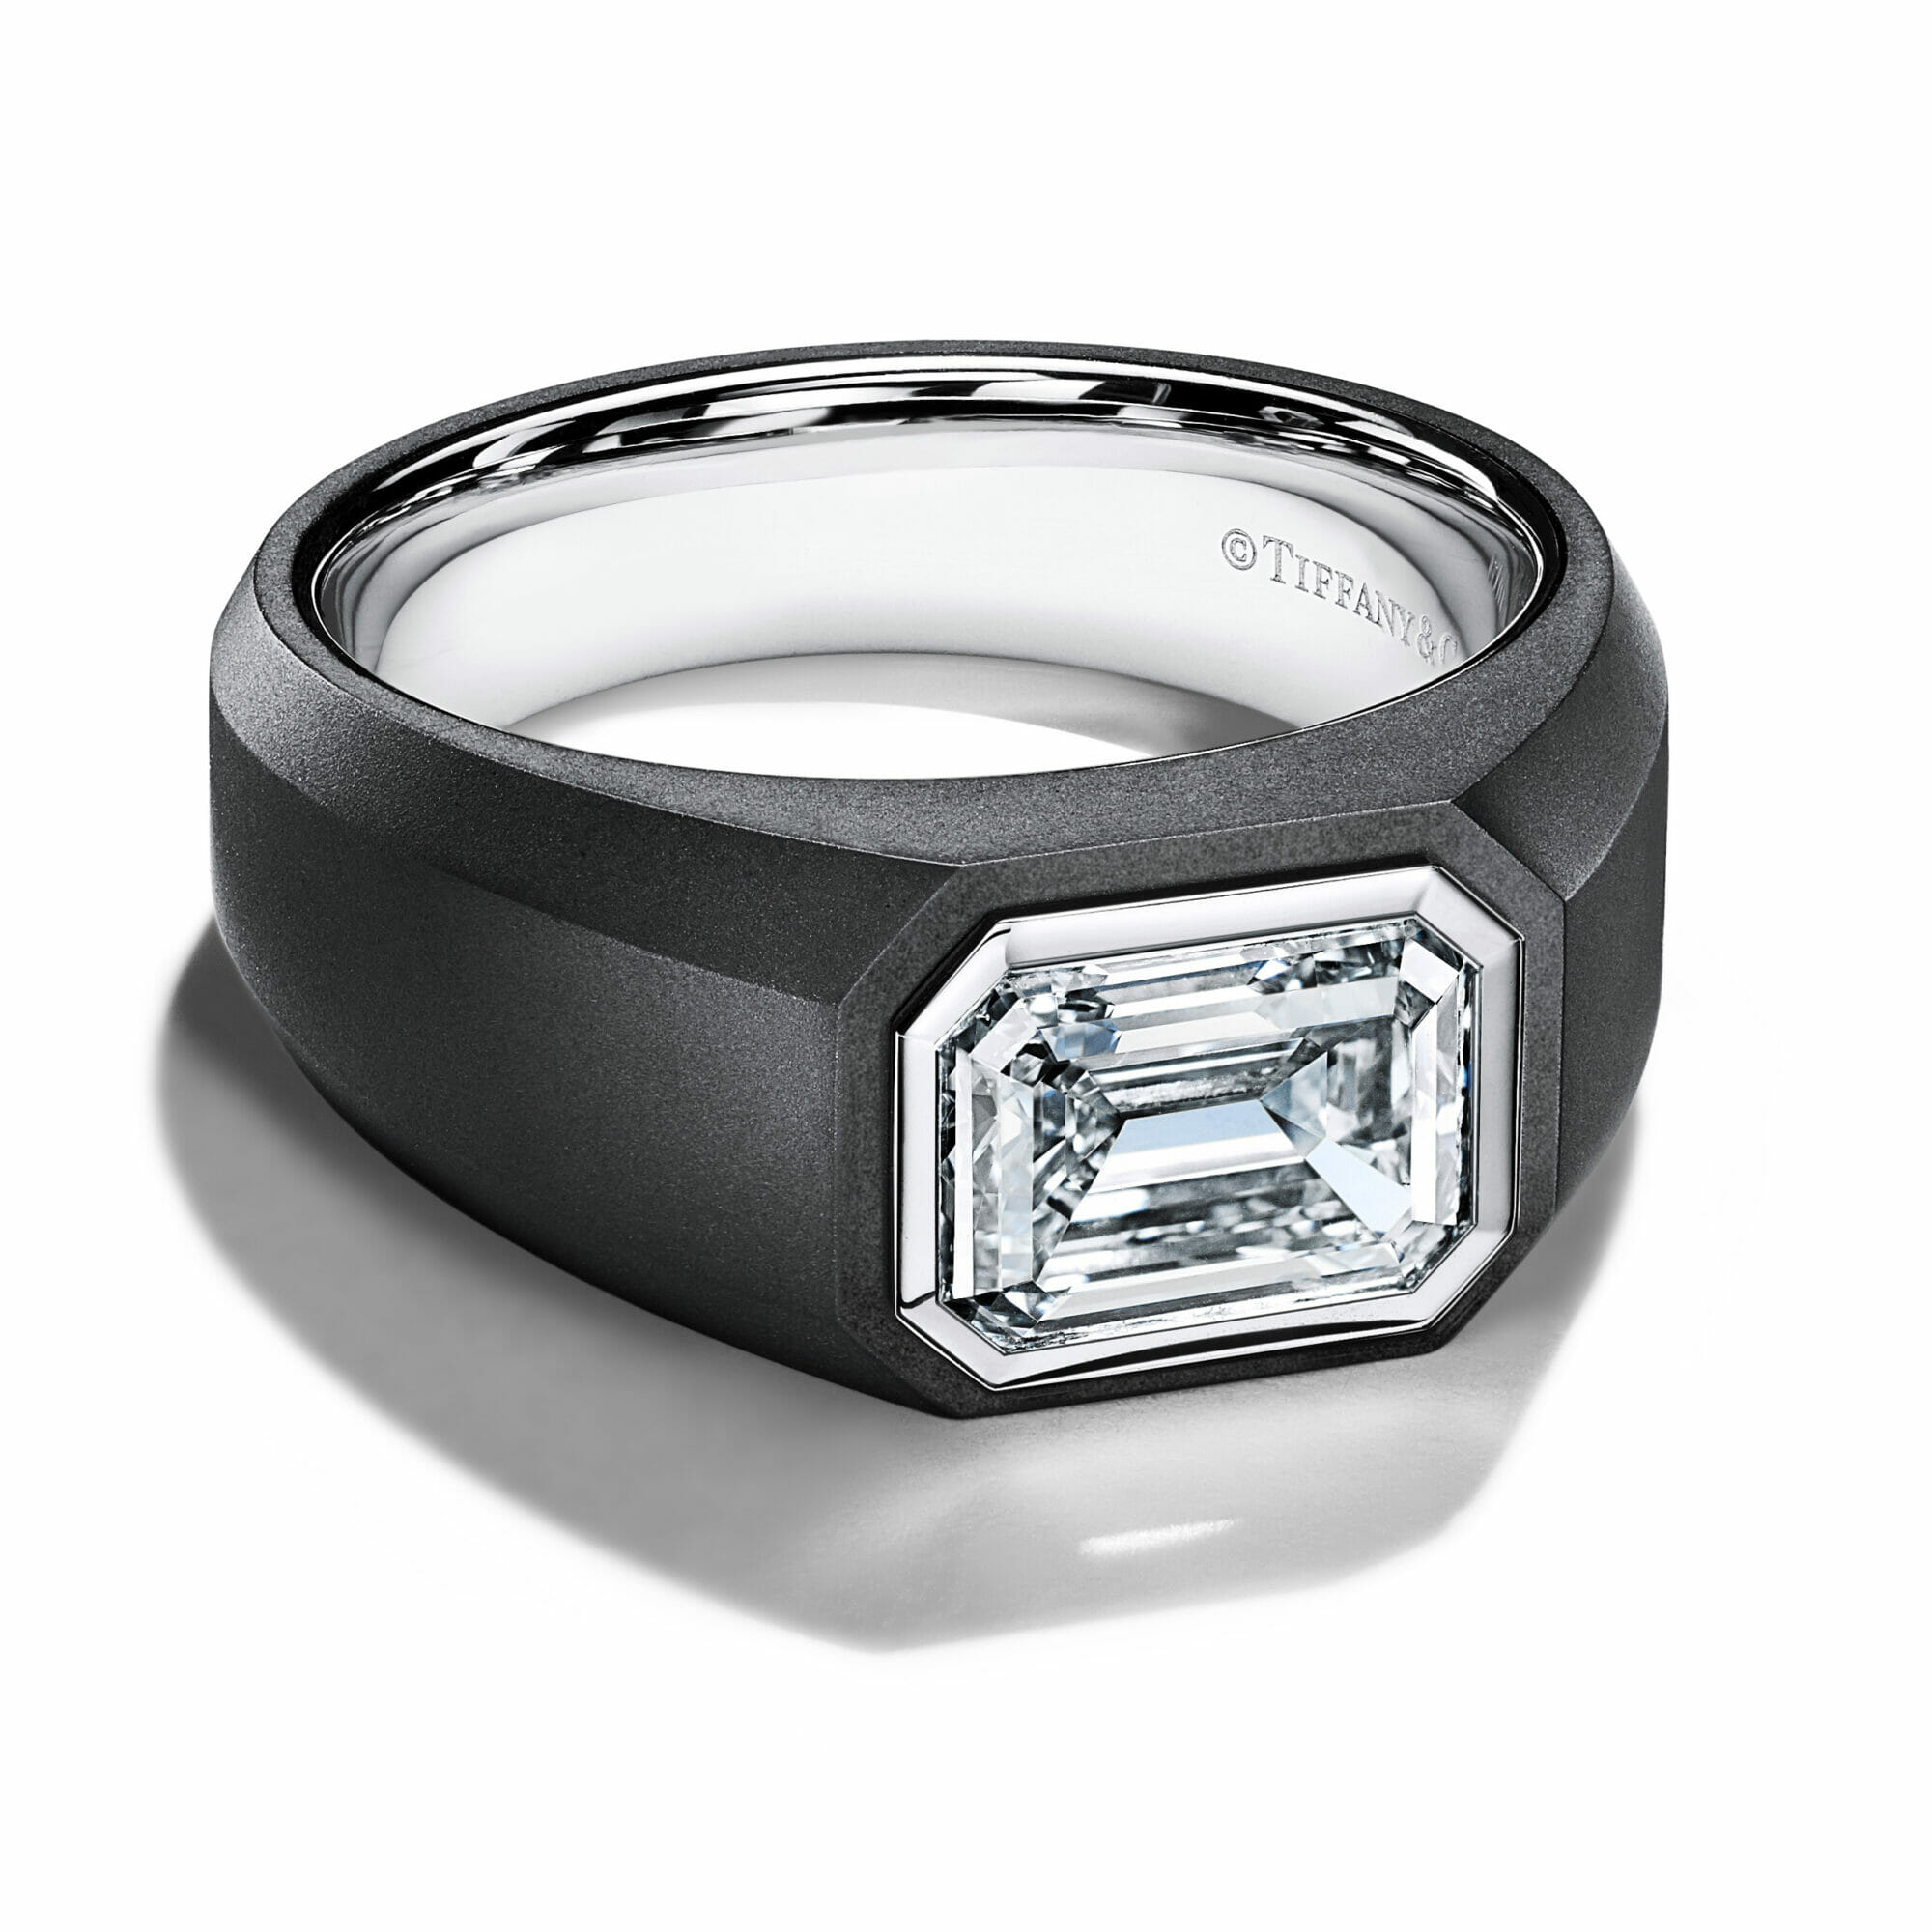 Costco Selling Fake Tiffany Diamond Rings - Judge Rules Costco Must Pay $19  Million